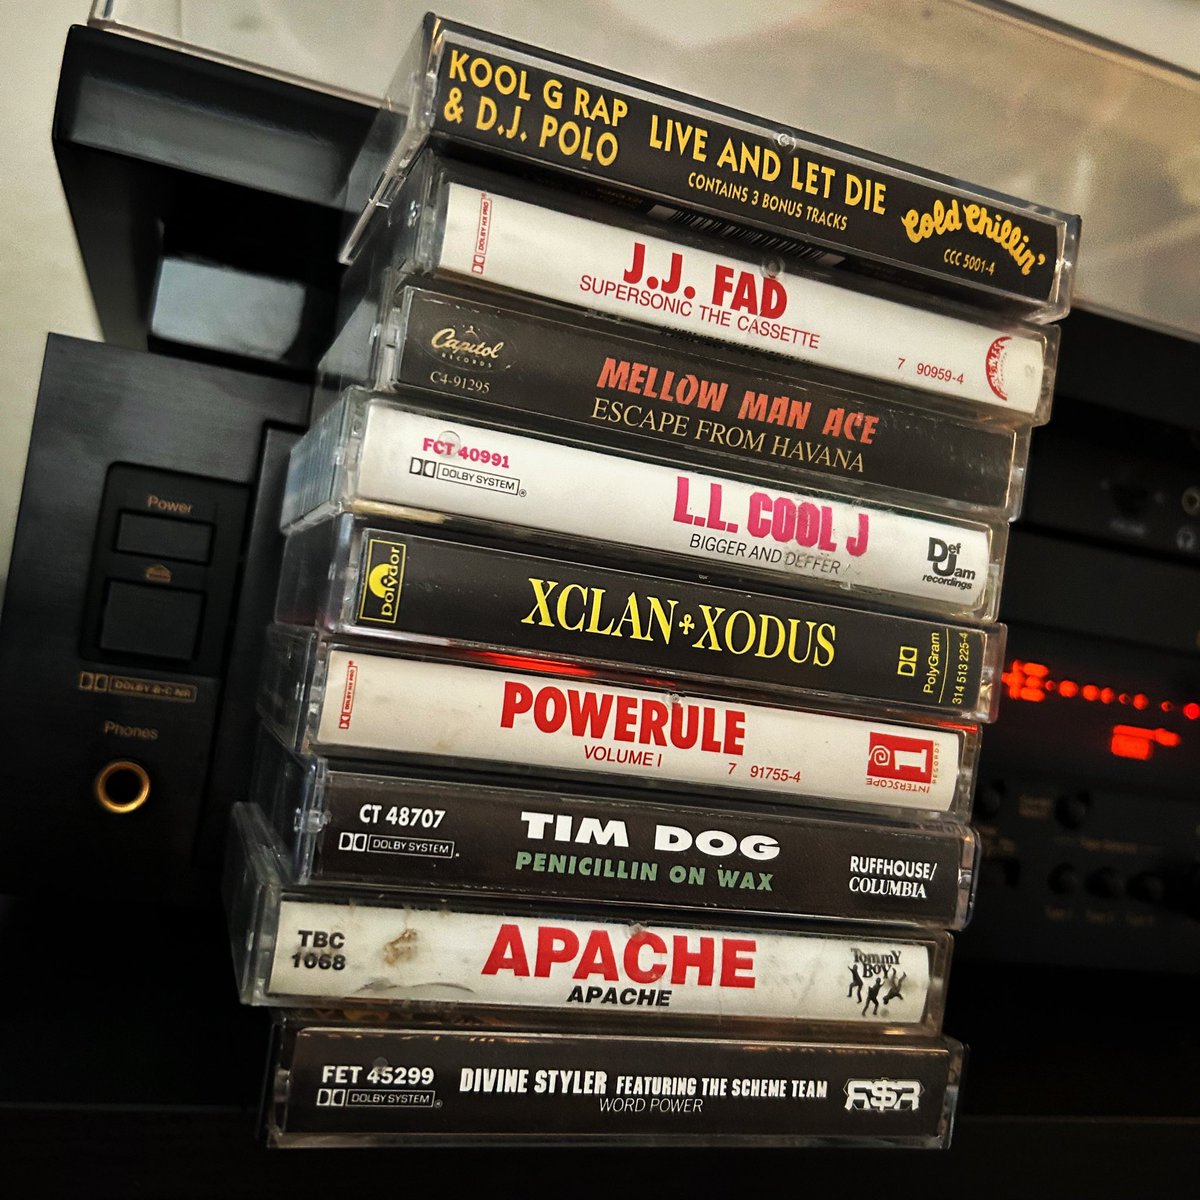 Sunday stack…

#koolgrap #djpolo #liveandletdie #jjfad #supersonic #thecassette #mellowmanace #escapefromhavana #llcoolj #biggeranddeffer #xclan #xodus #powerule #volume1 #timdog #penicillinonwax #apache #divinestyler #schemeteam #wordpower #classic #cassettes #hiphopgods